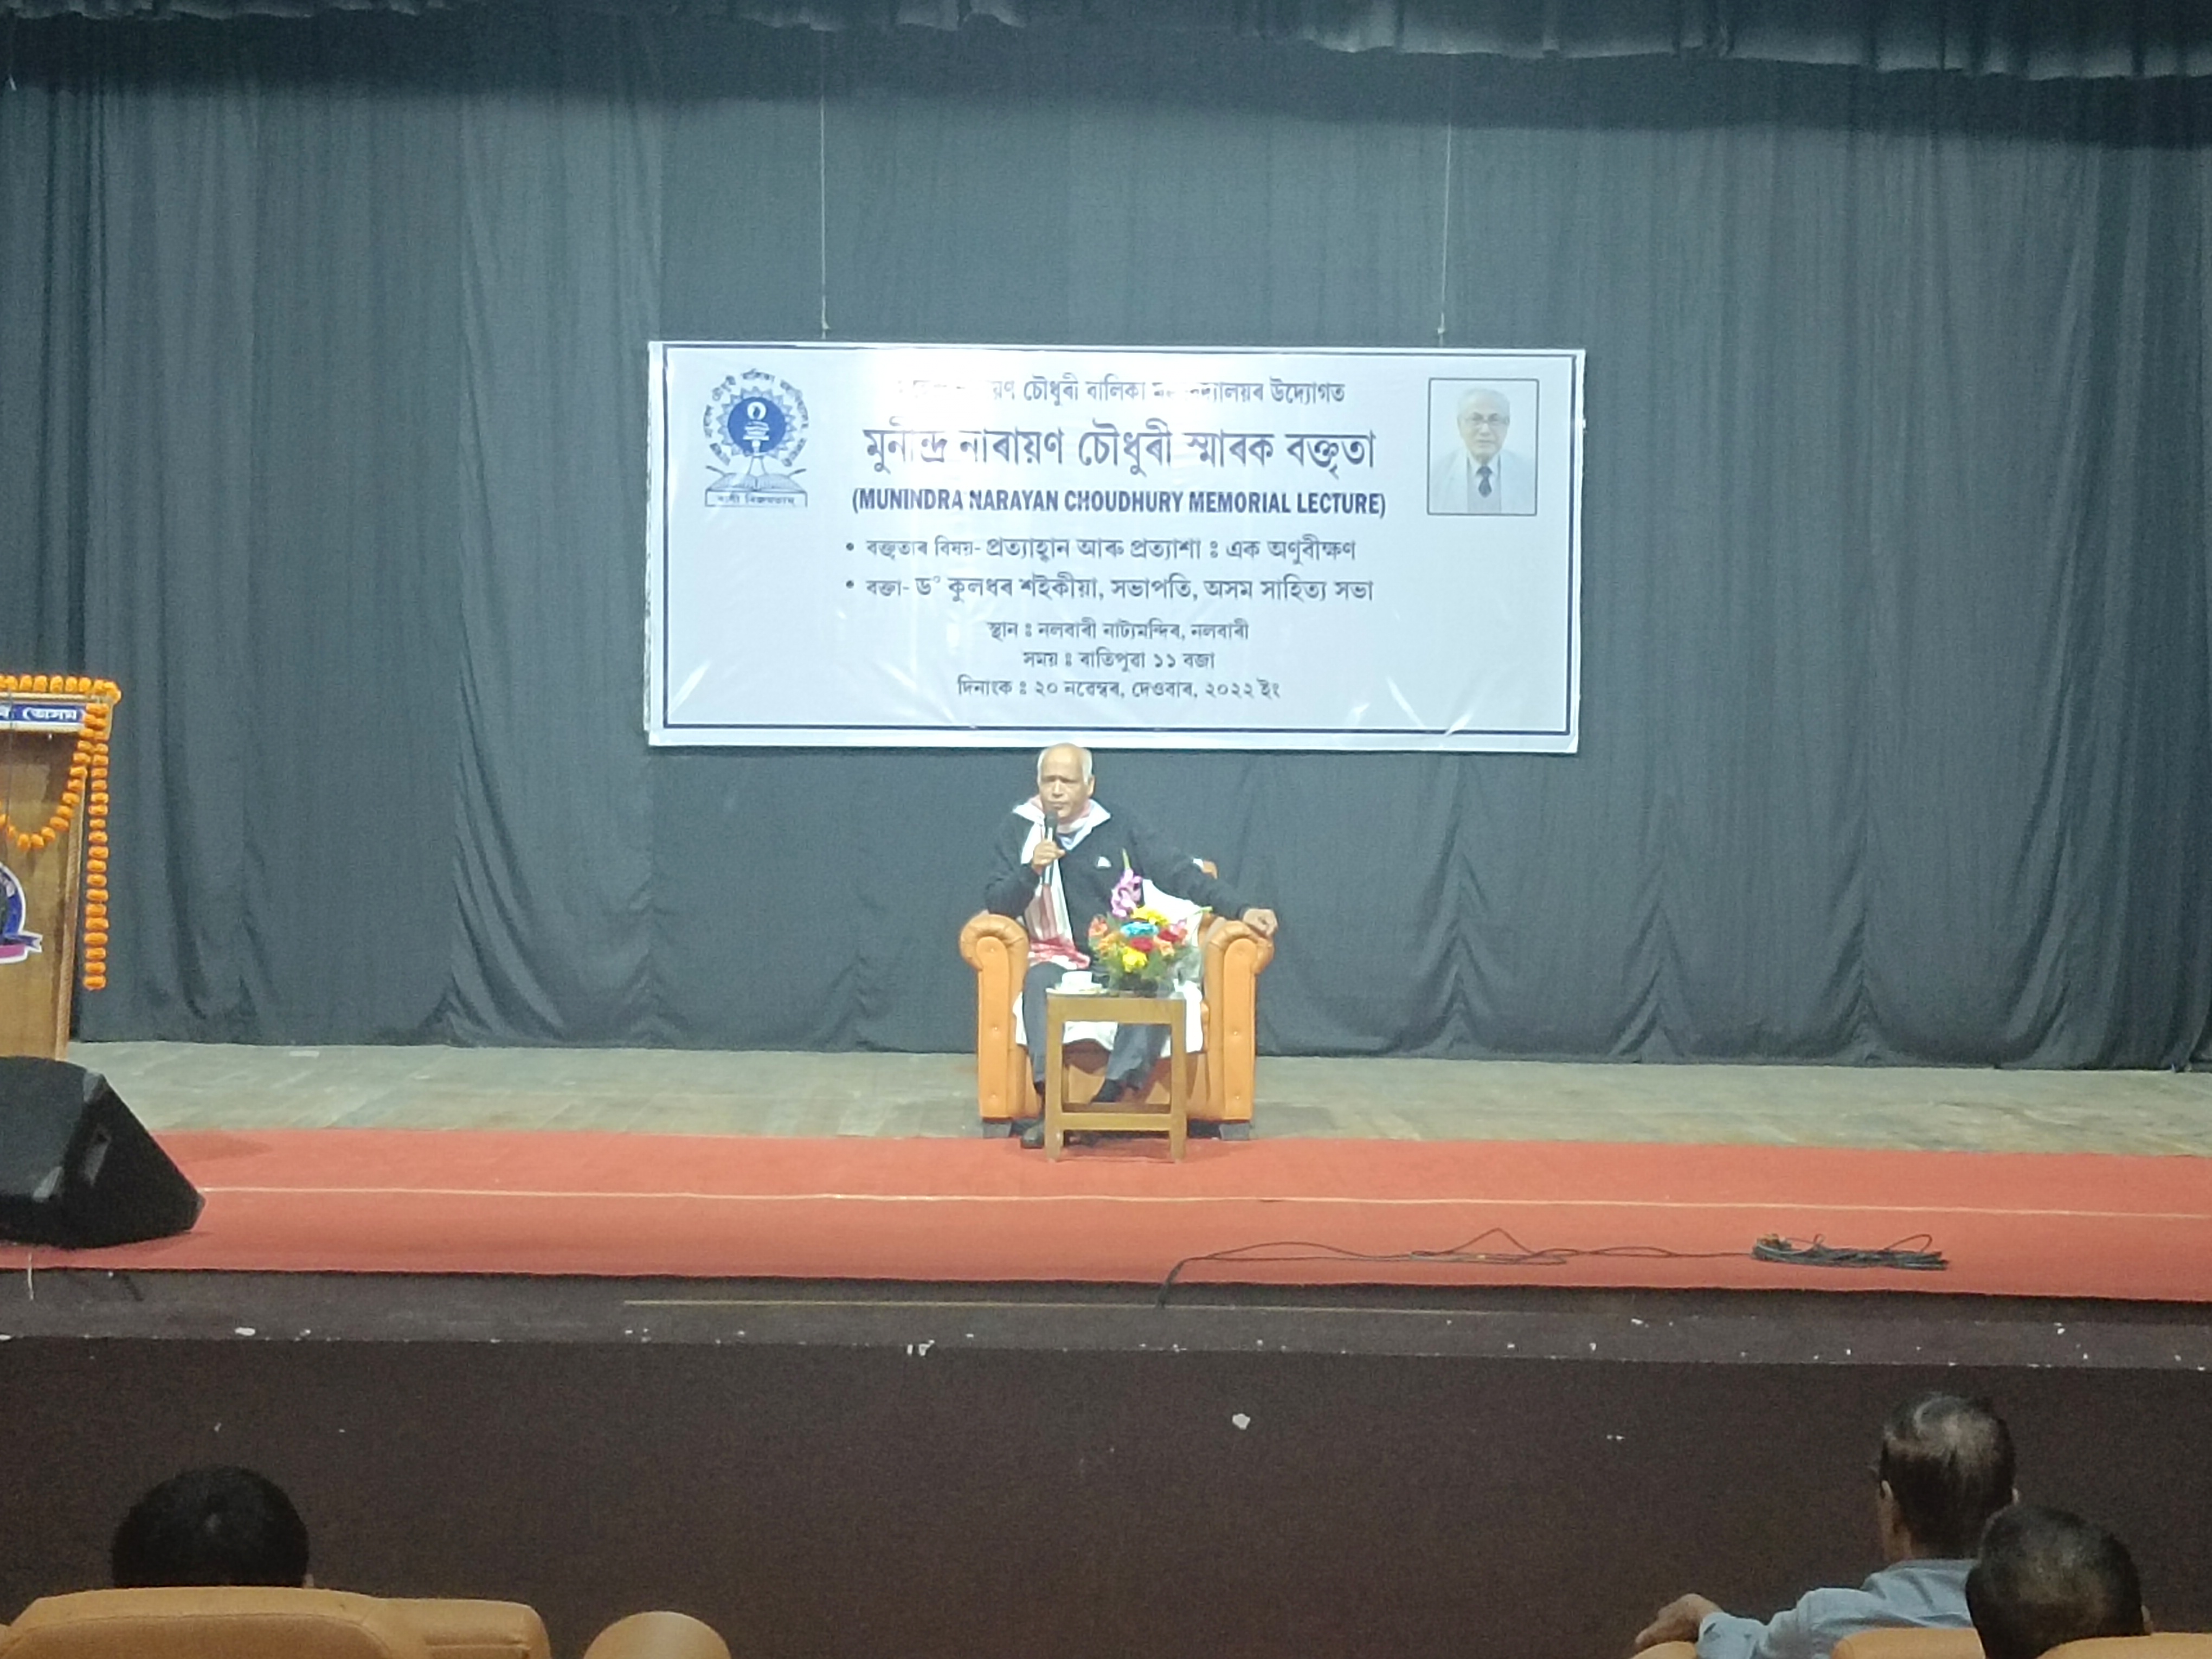 Munindra Narayan Choudhury Memorial Lecture